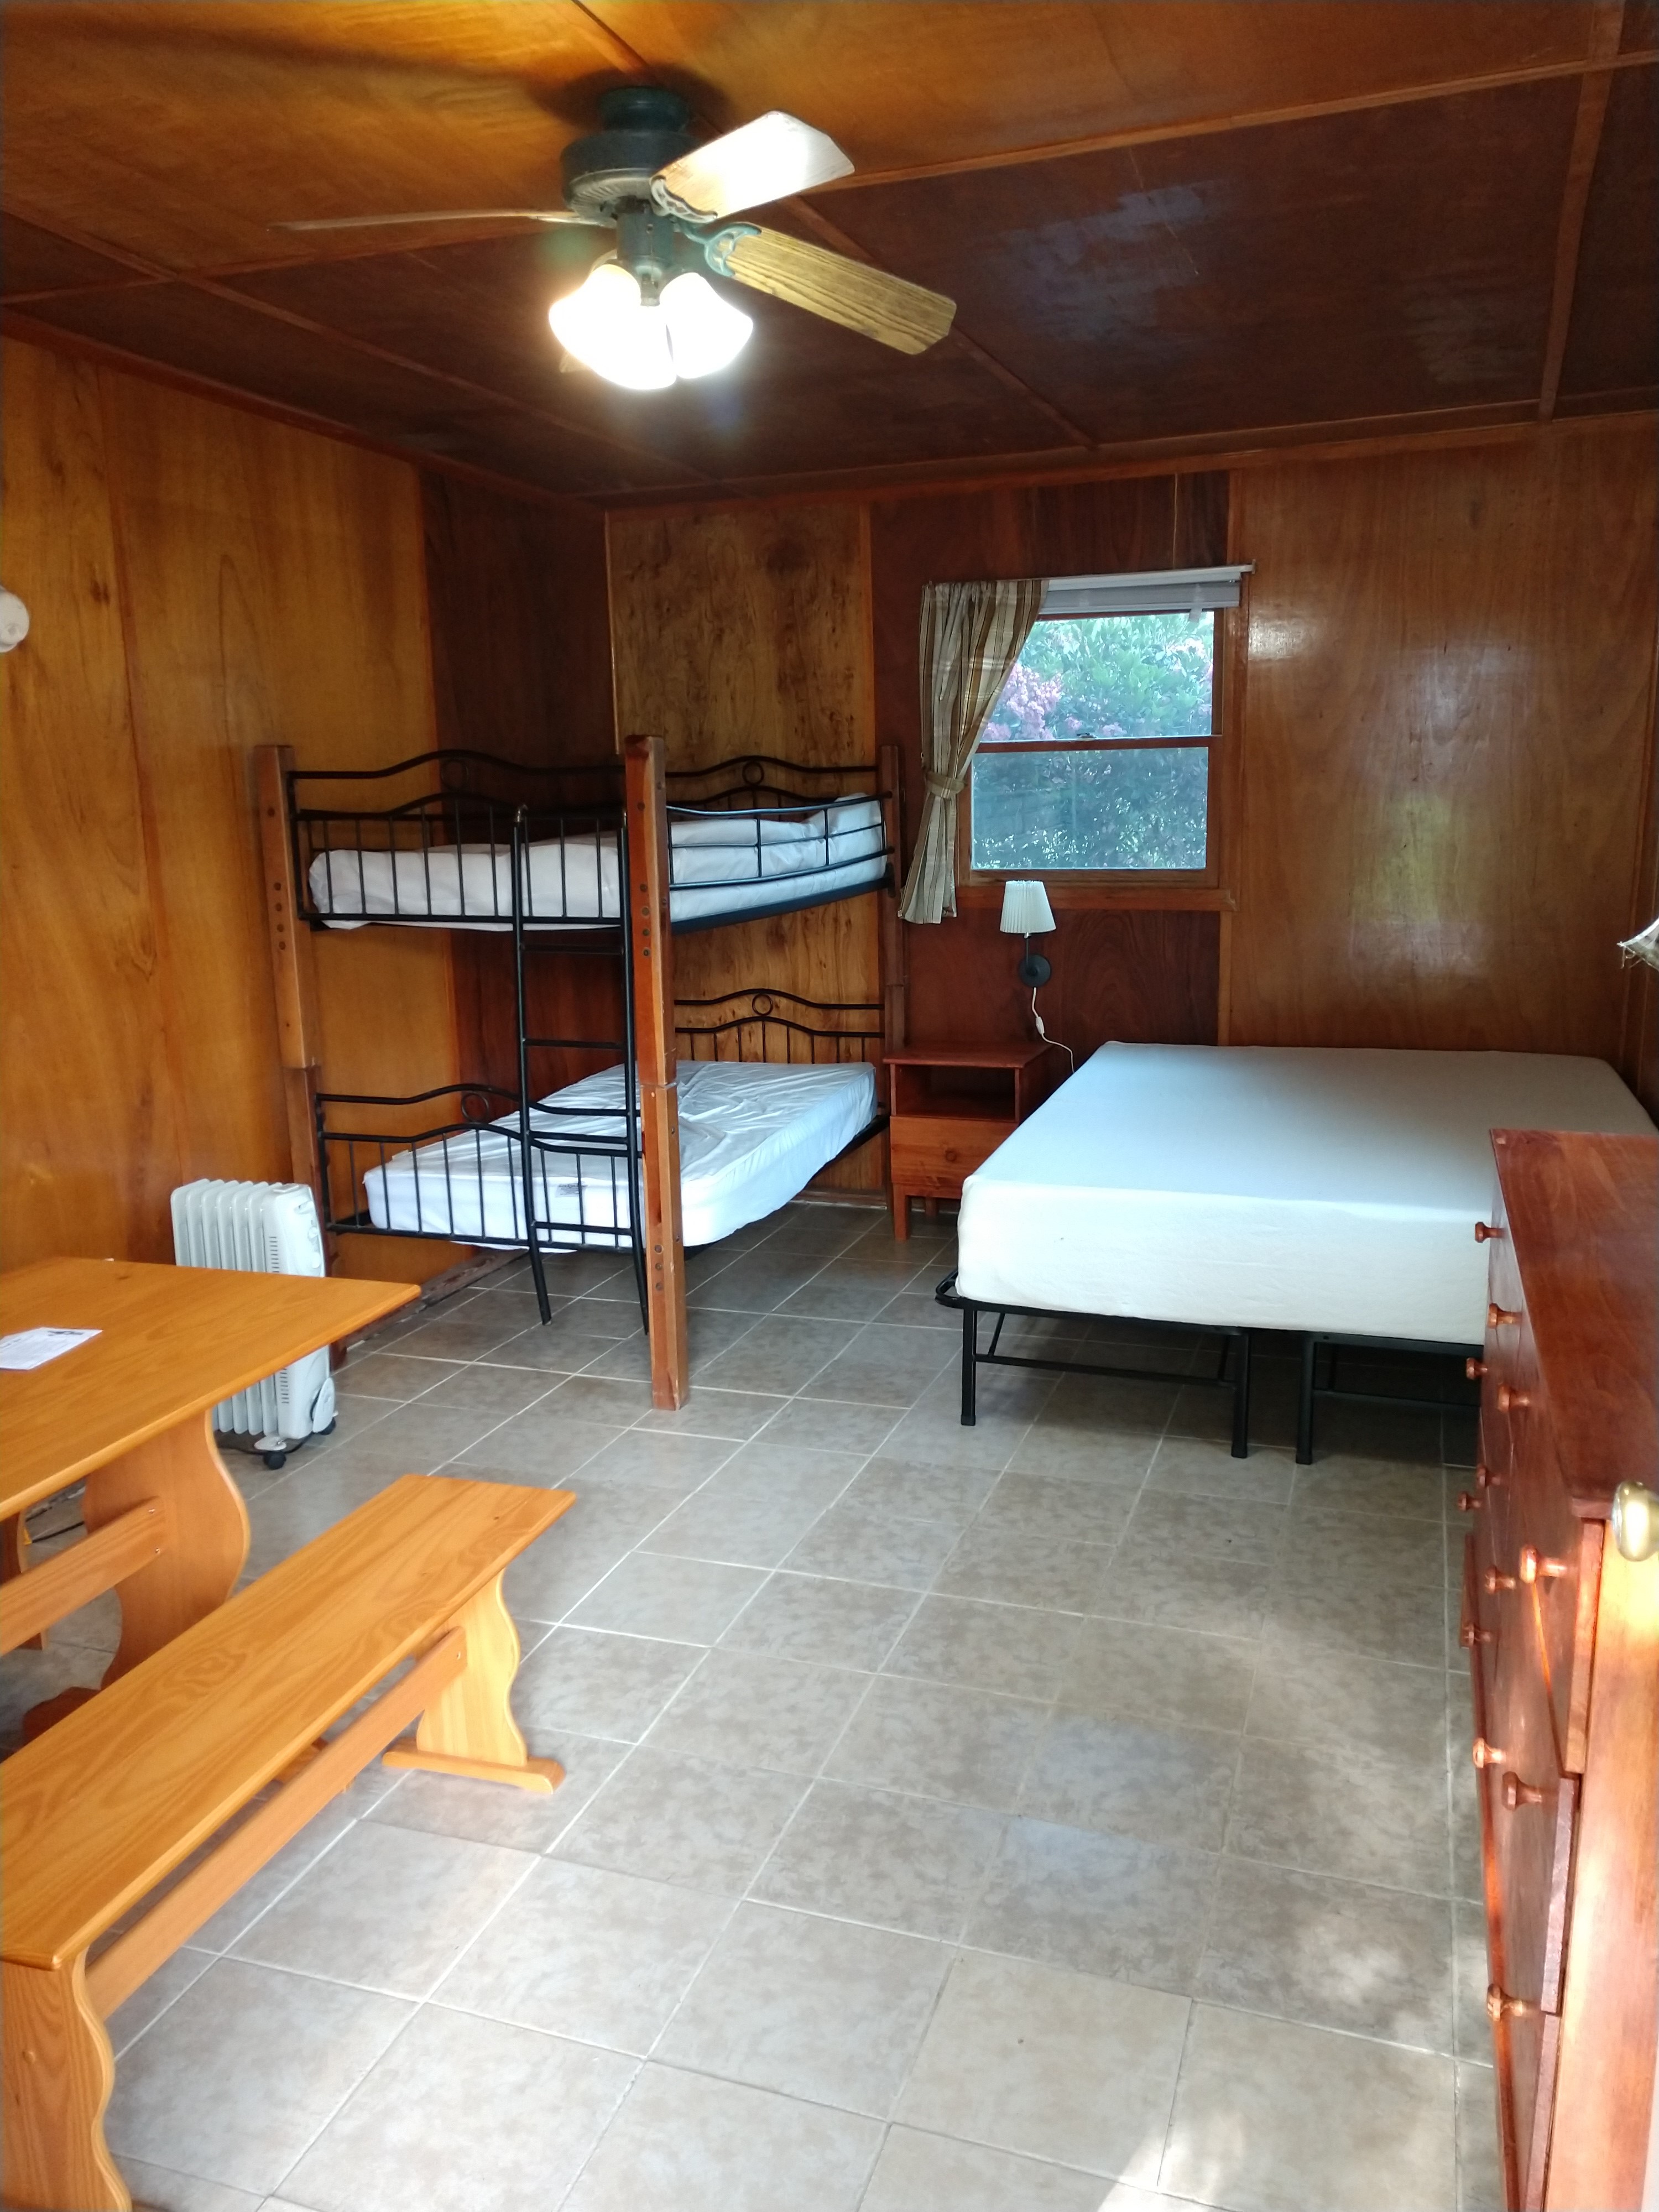 https://www.grandfatherrv.com/wp-content/uploads/2015/03/Camping-Cabin-Interior.jpg